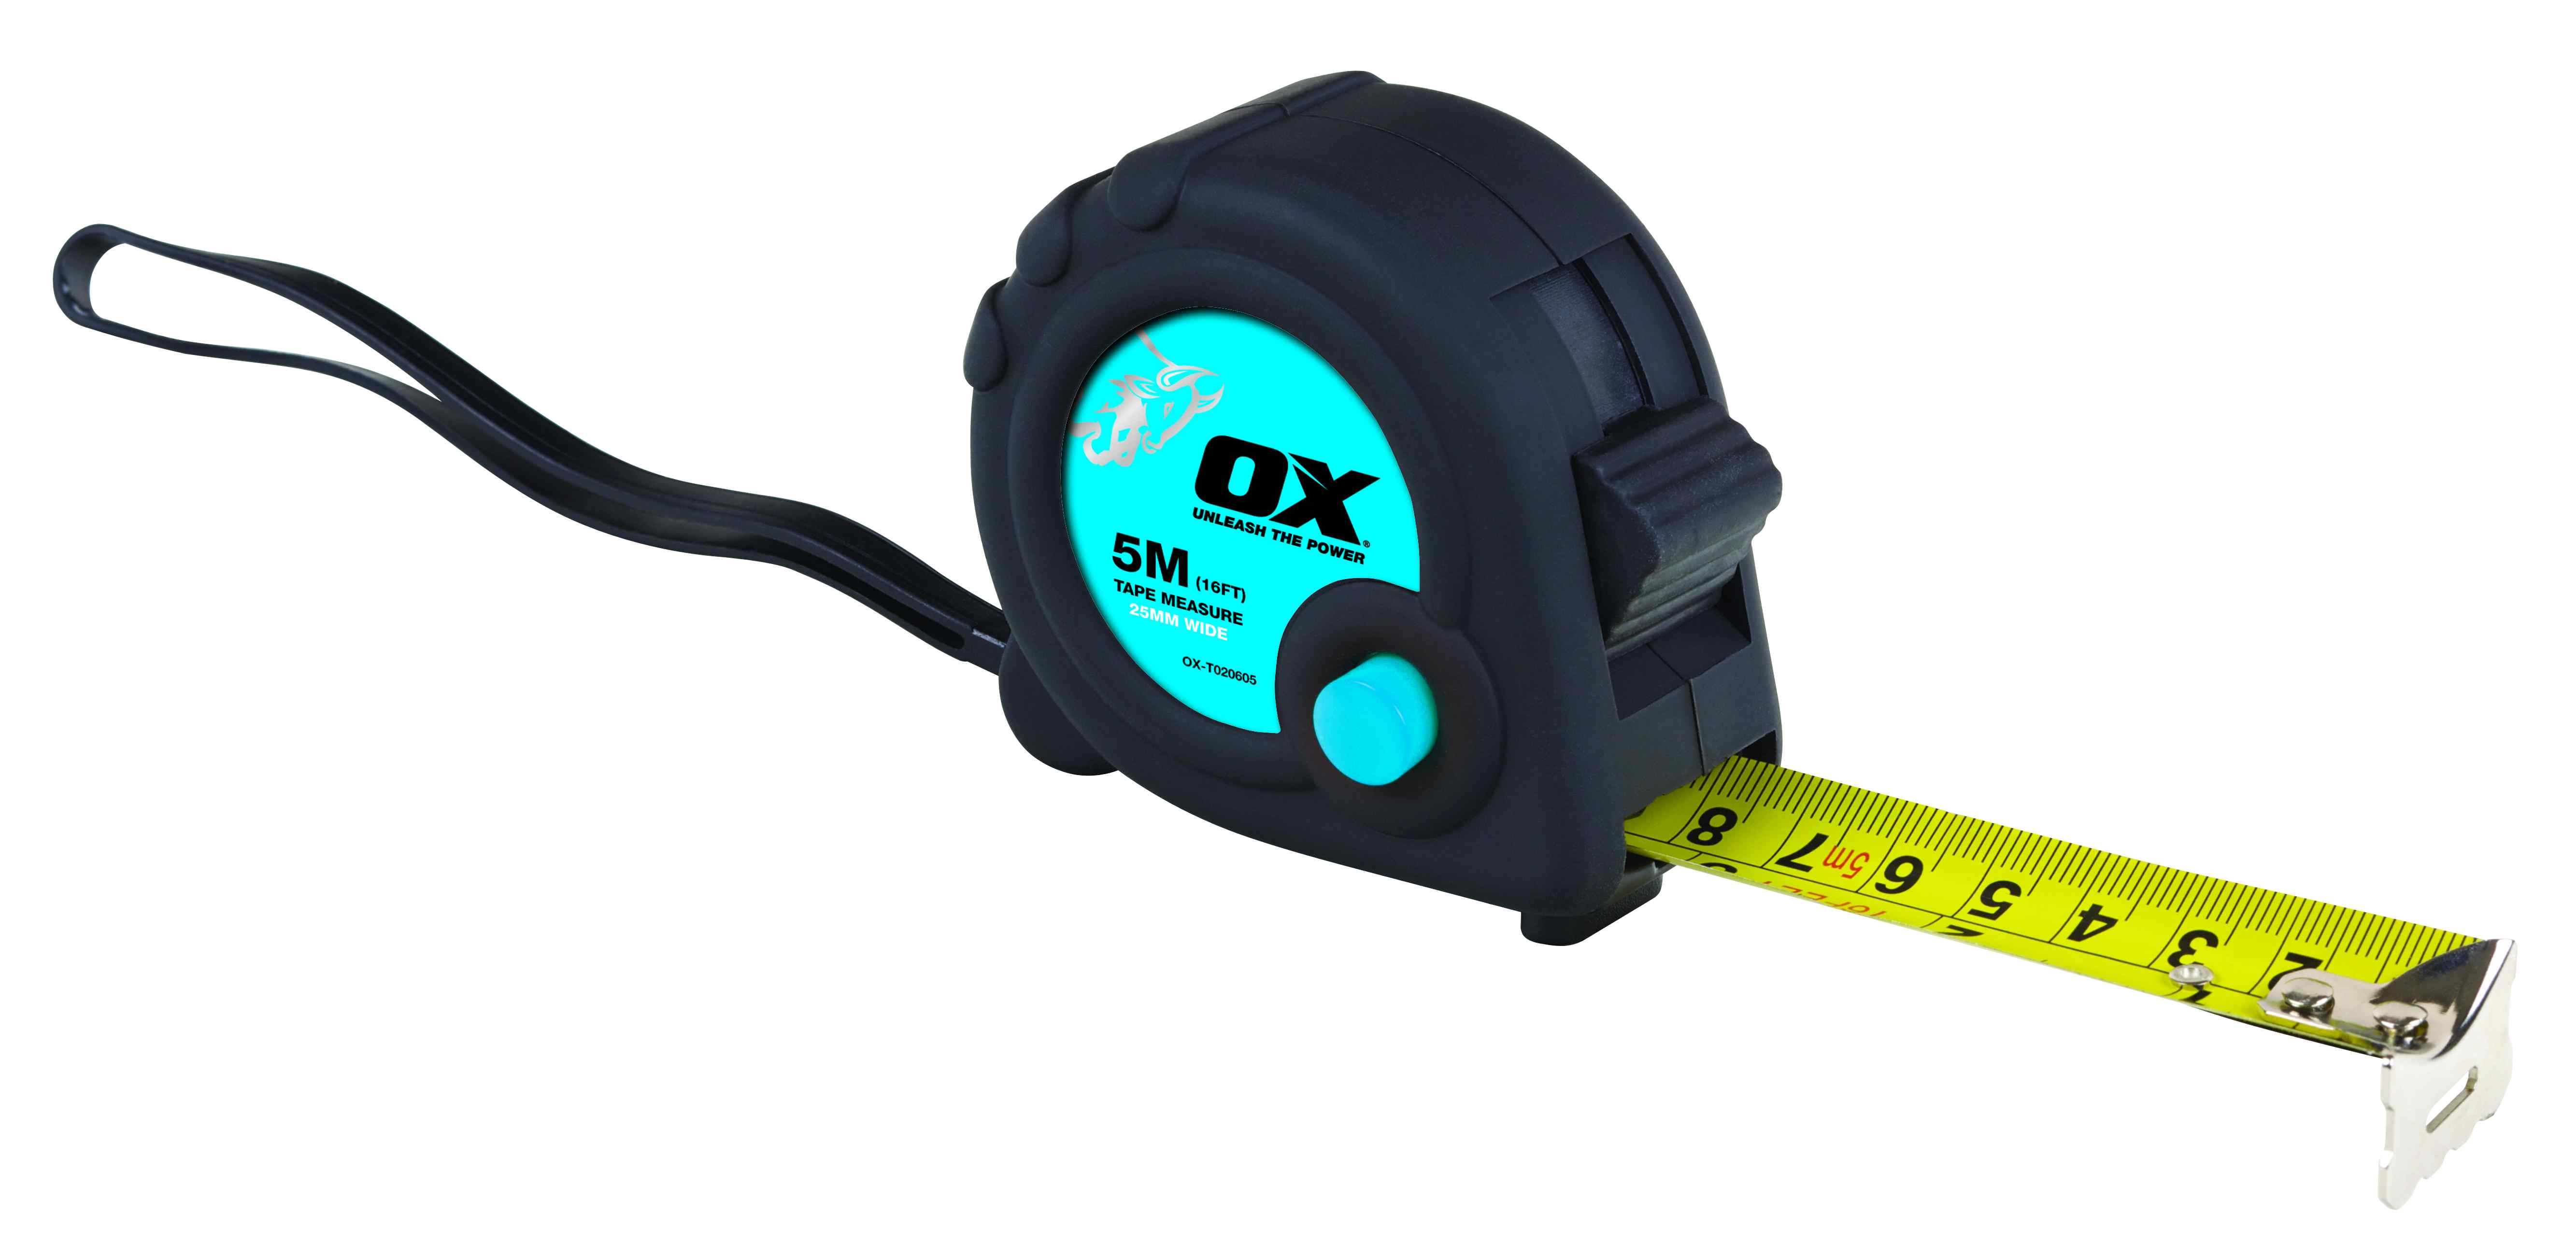 OX Trade 5m Tape Measure